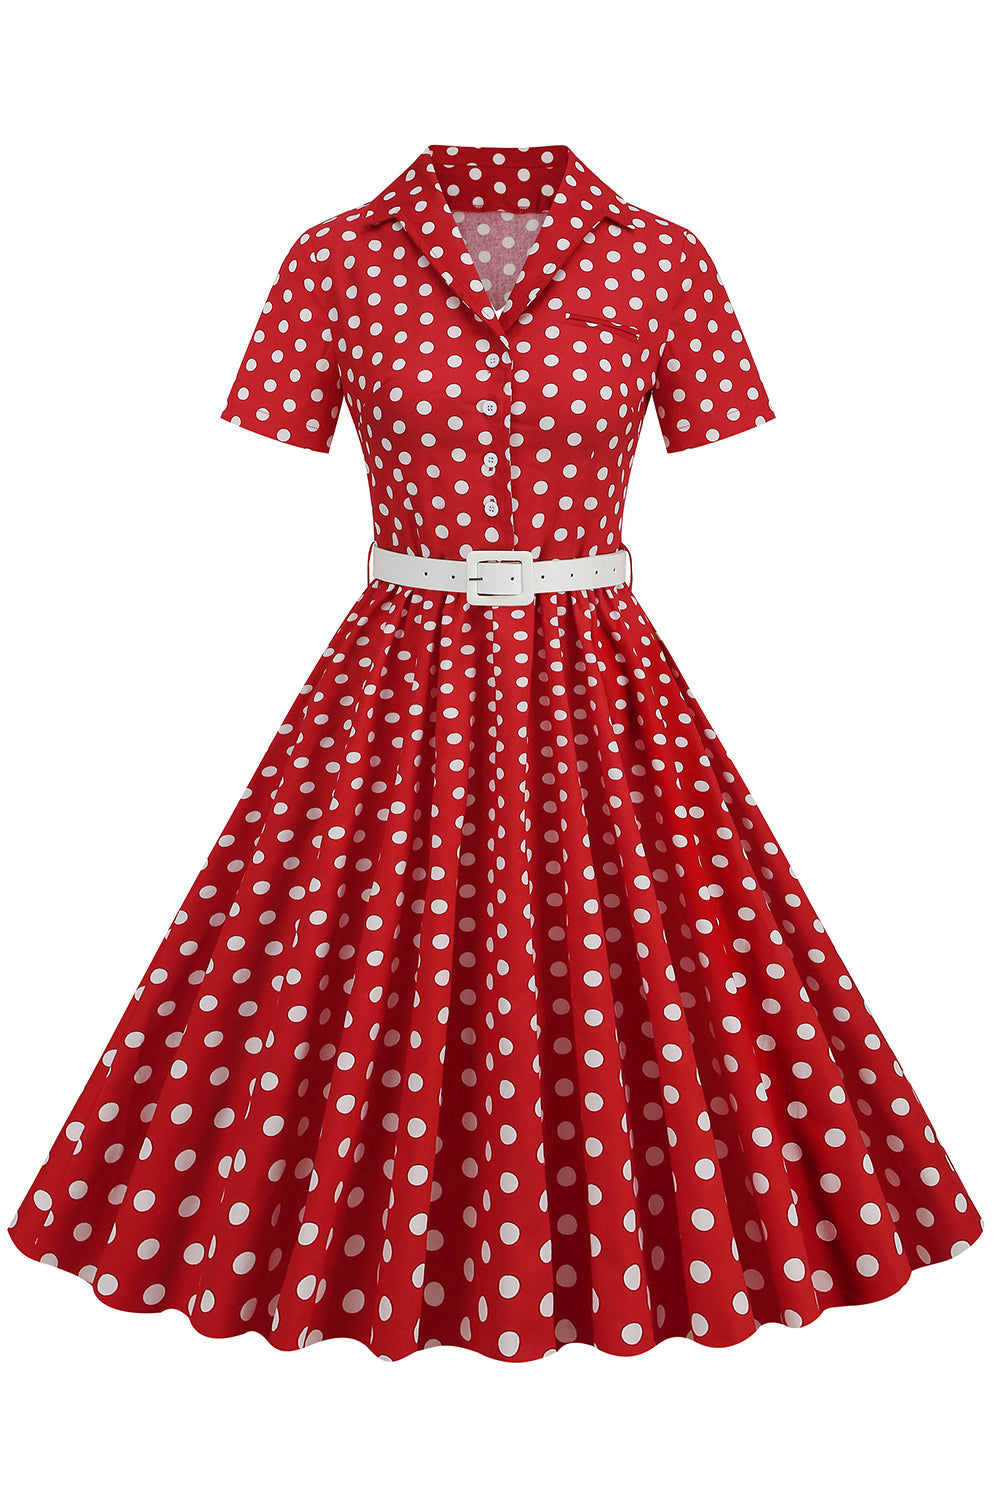 Hepburn Style V Neck Blue Polka Dots 1950s Dress